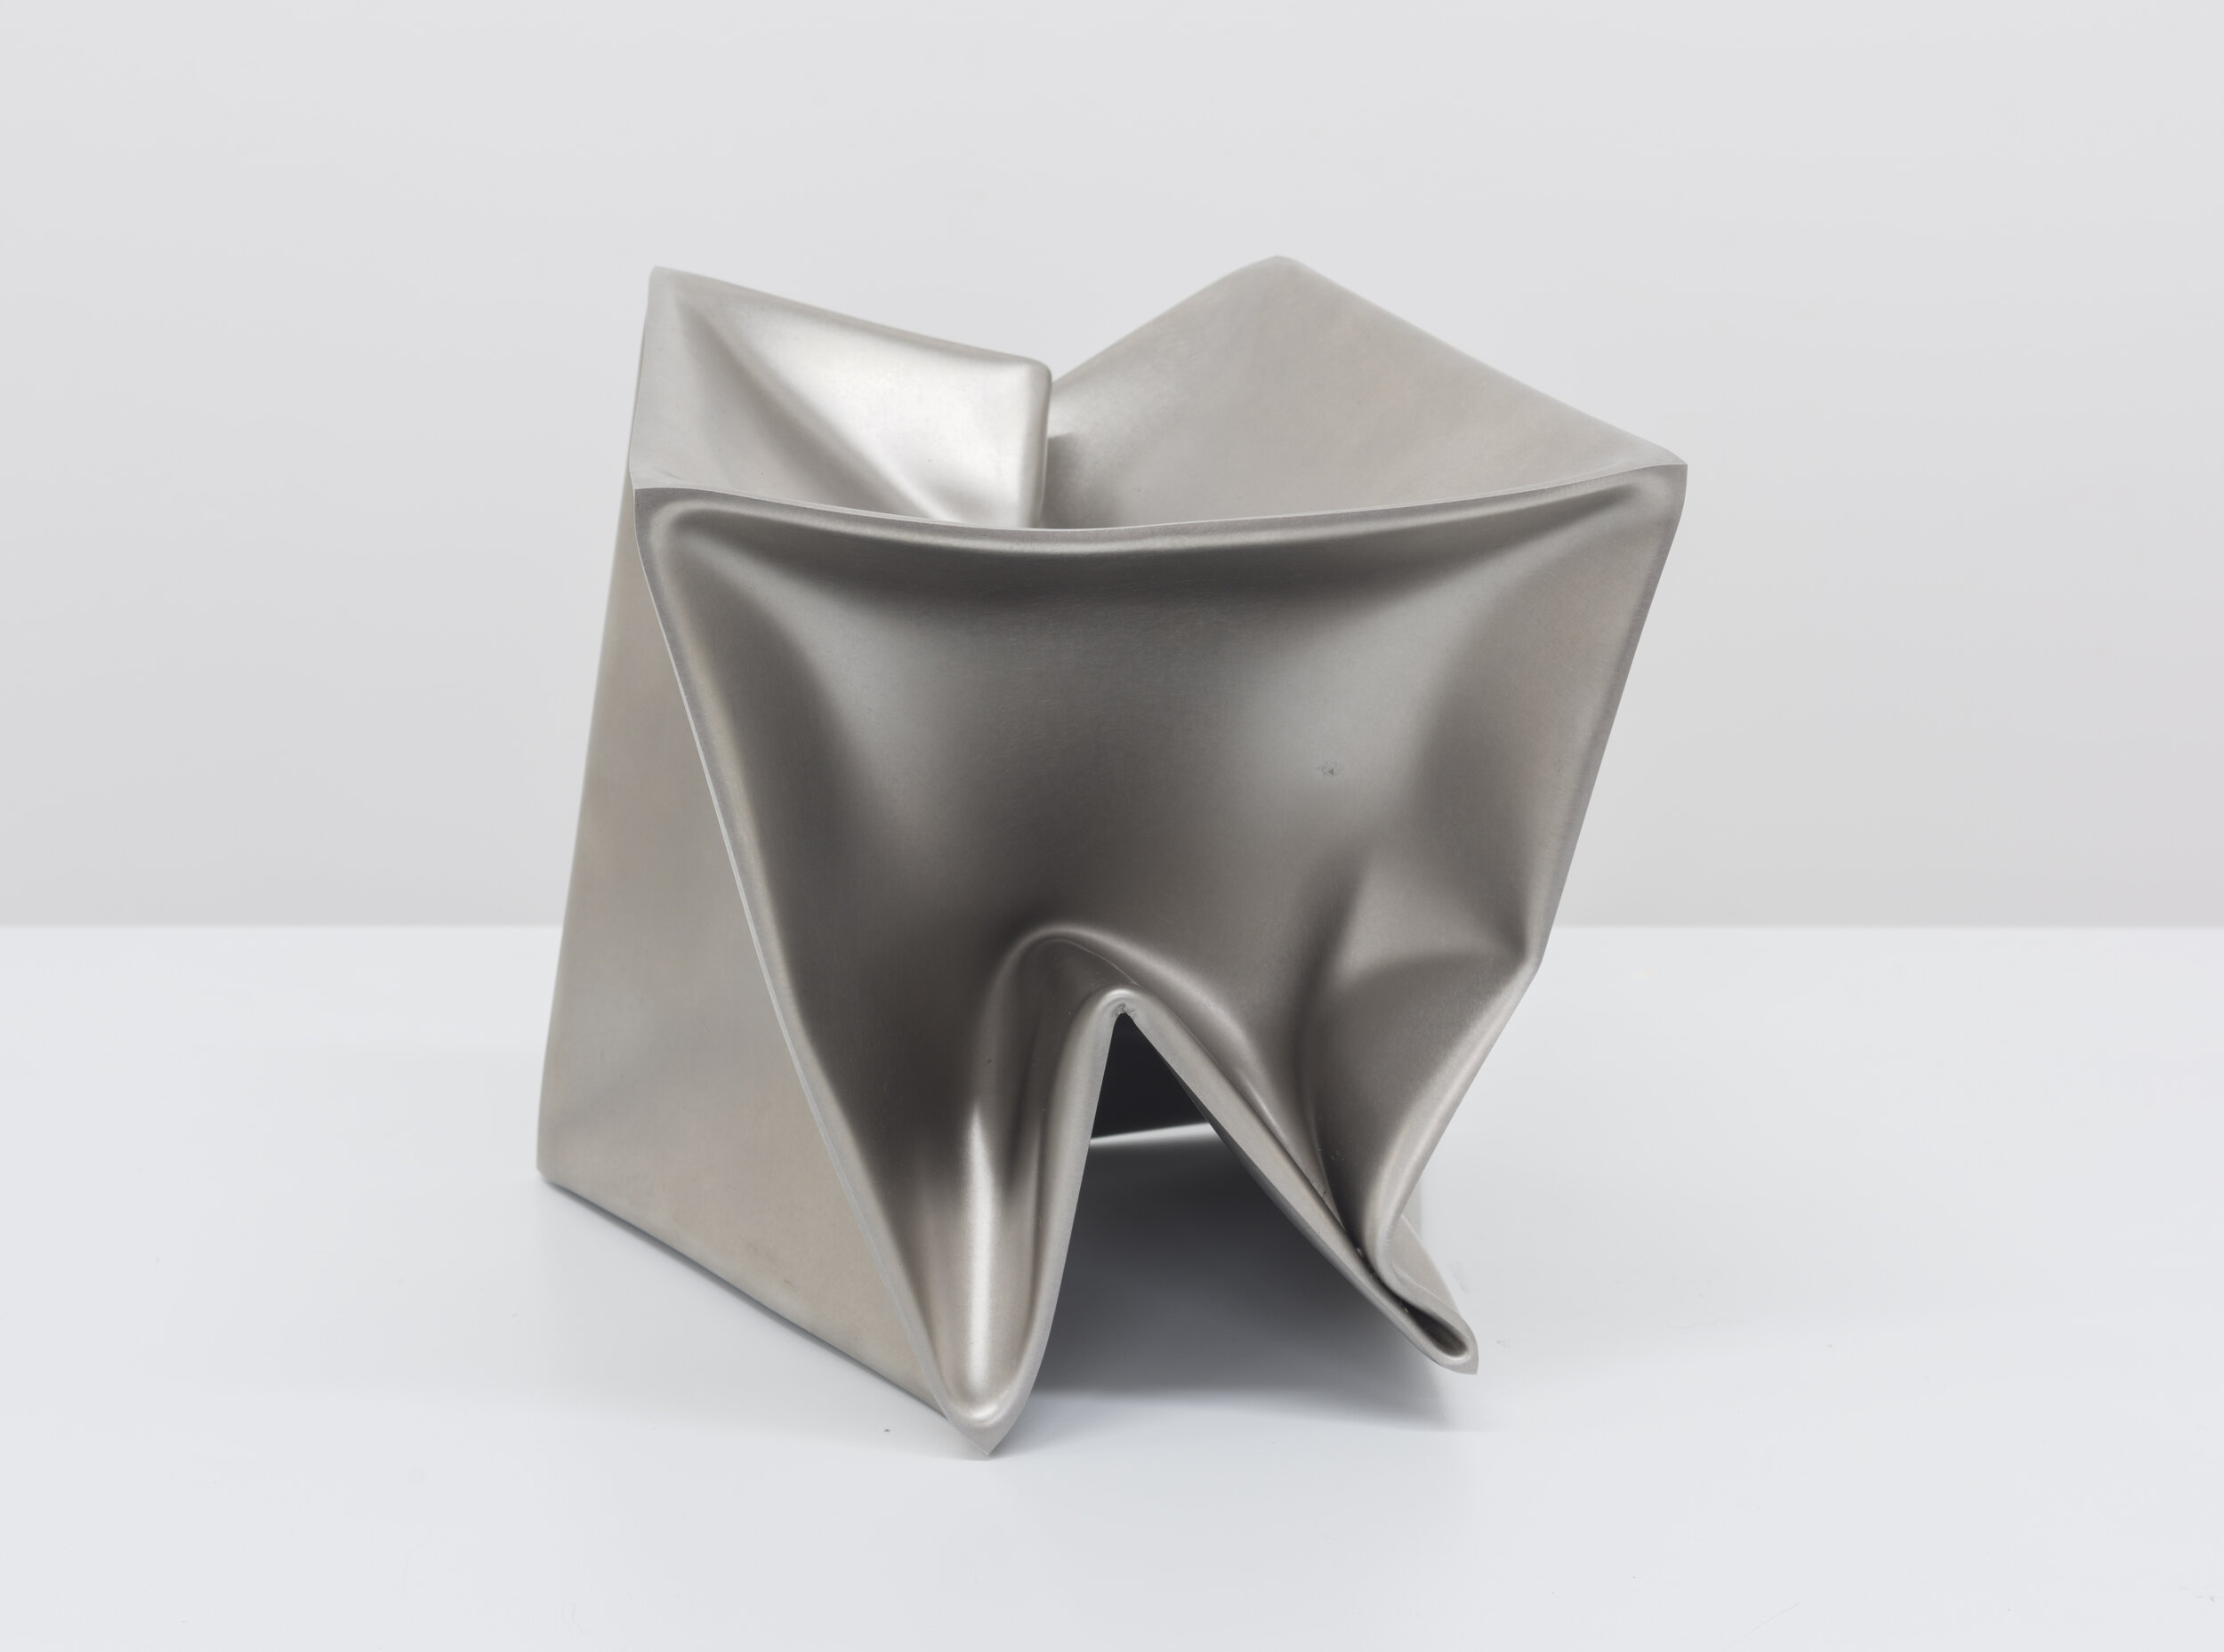  Ewerdt Hilgemann  Imploded Cube #100401 , 2010 stainless steel 9 1/2 x 9 1/2 x 9 1/2 in (24 x 24 x 24 cm) 